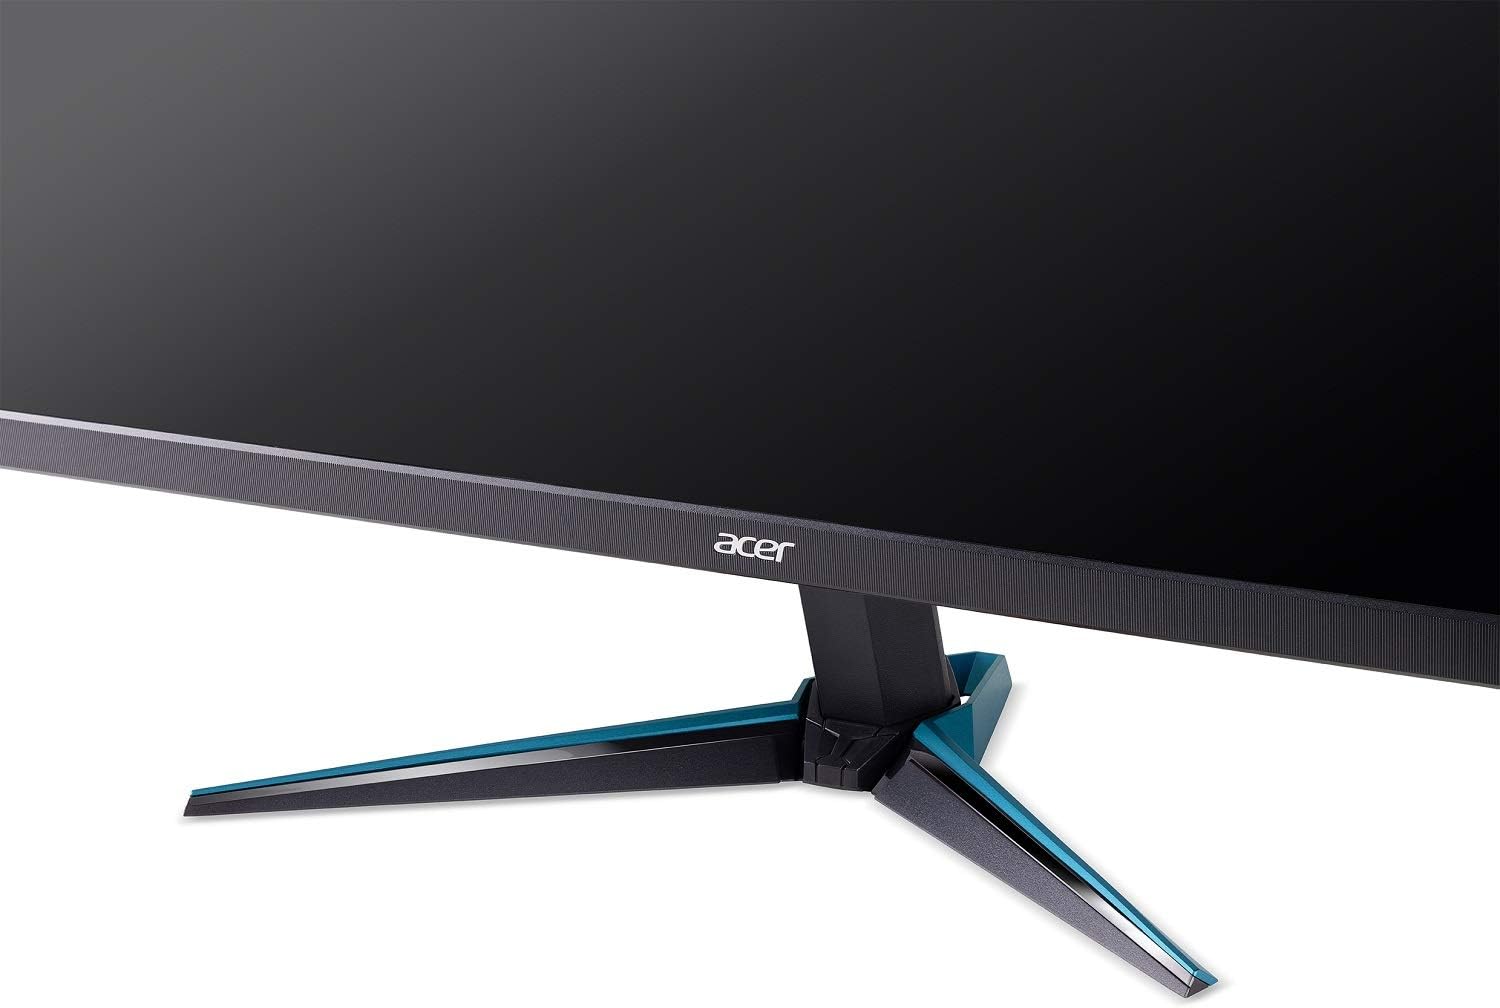 Acer Nitro VG240Y bmiix 23.8" Full HD (1920 x 1080) IPS Monitor with AMD Radeon FREESYNC Technology - 1ms VRB | 75Hz Refresh | (2 HDMI Ports & 1 VGA),Black - CaveHubs